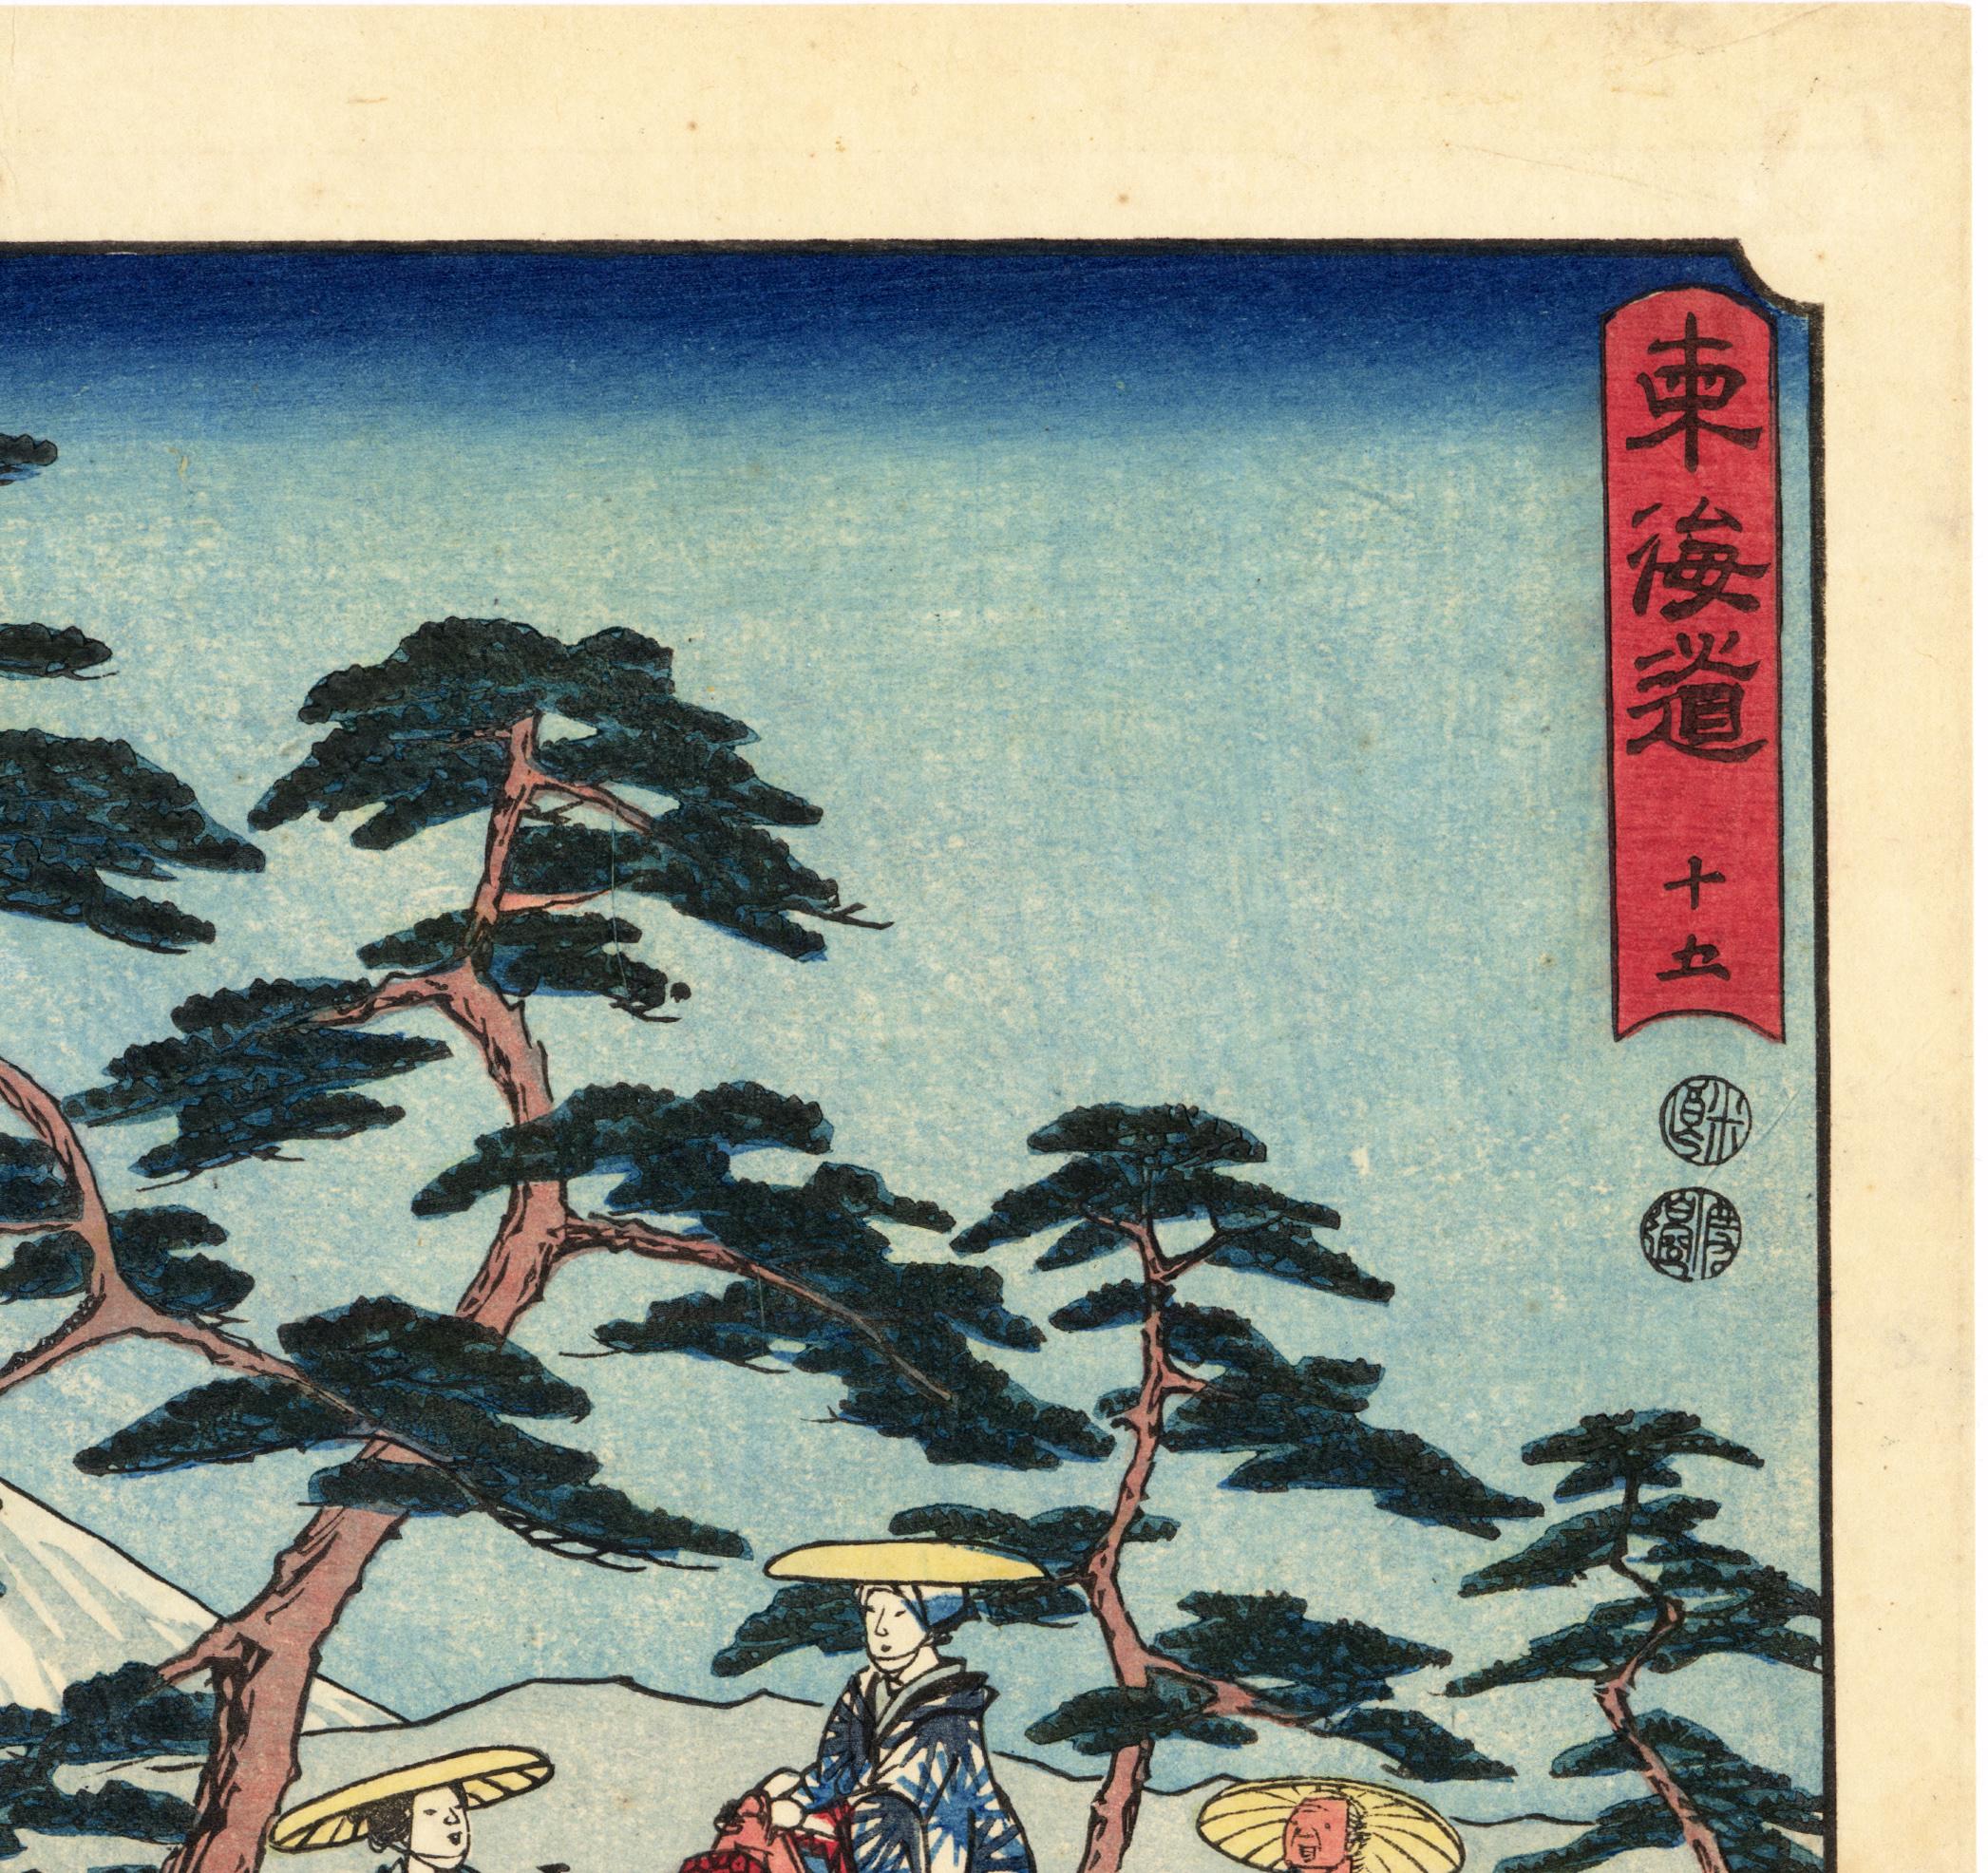 Station Yoshiwara from the Reisho Tokaido - Gray Landscape Print by Utagawa Hiroshige (Ando Hiroshige)